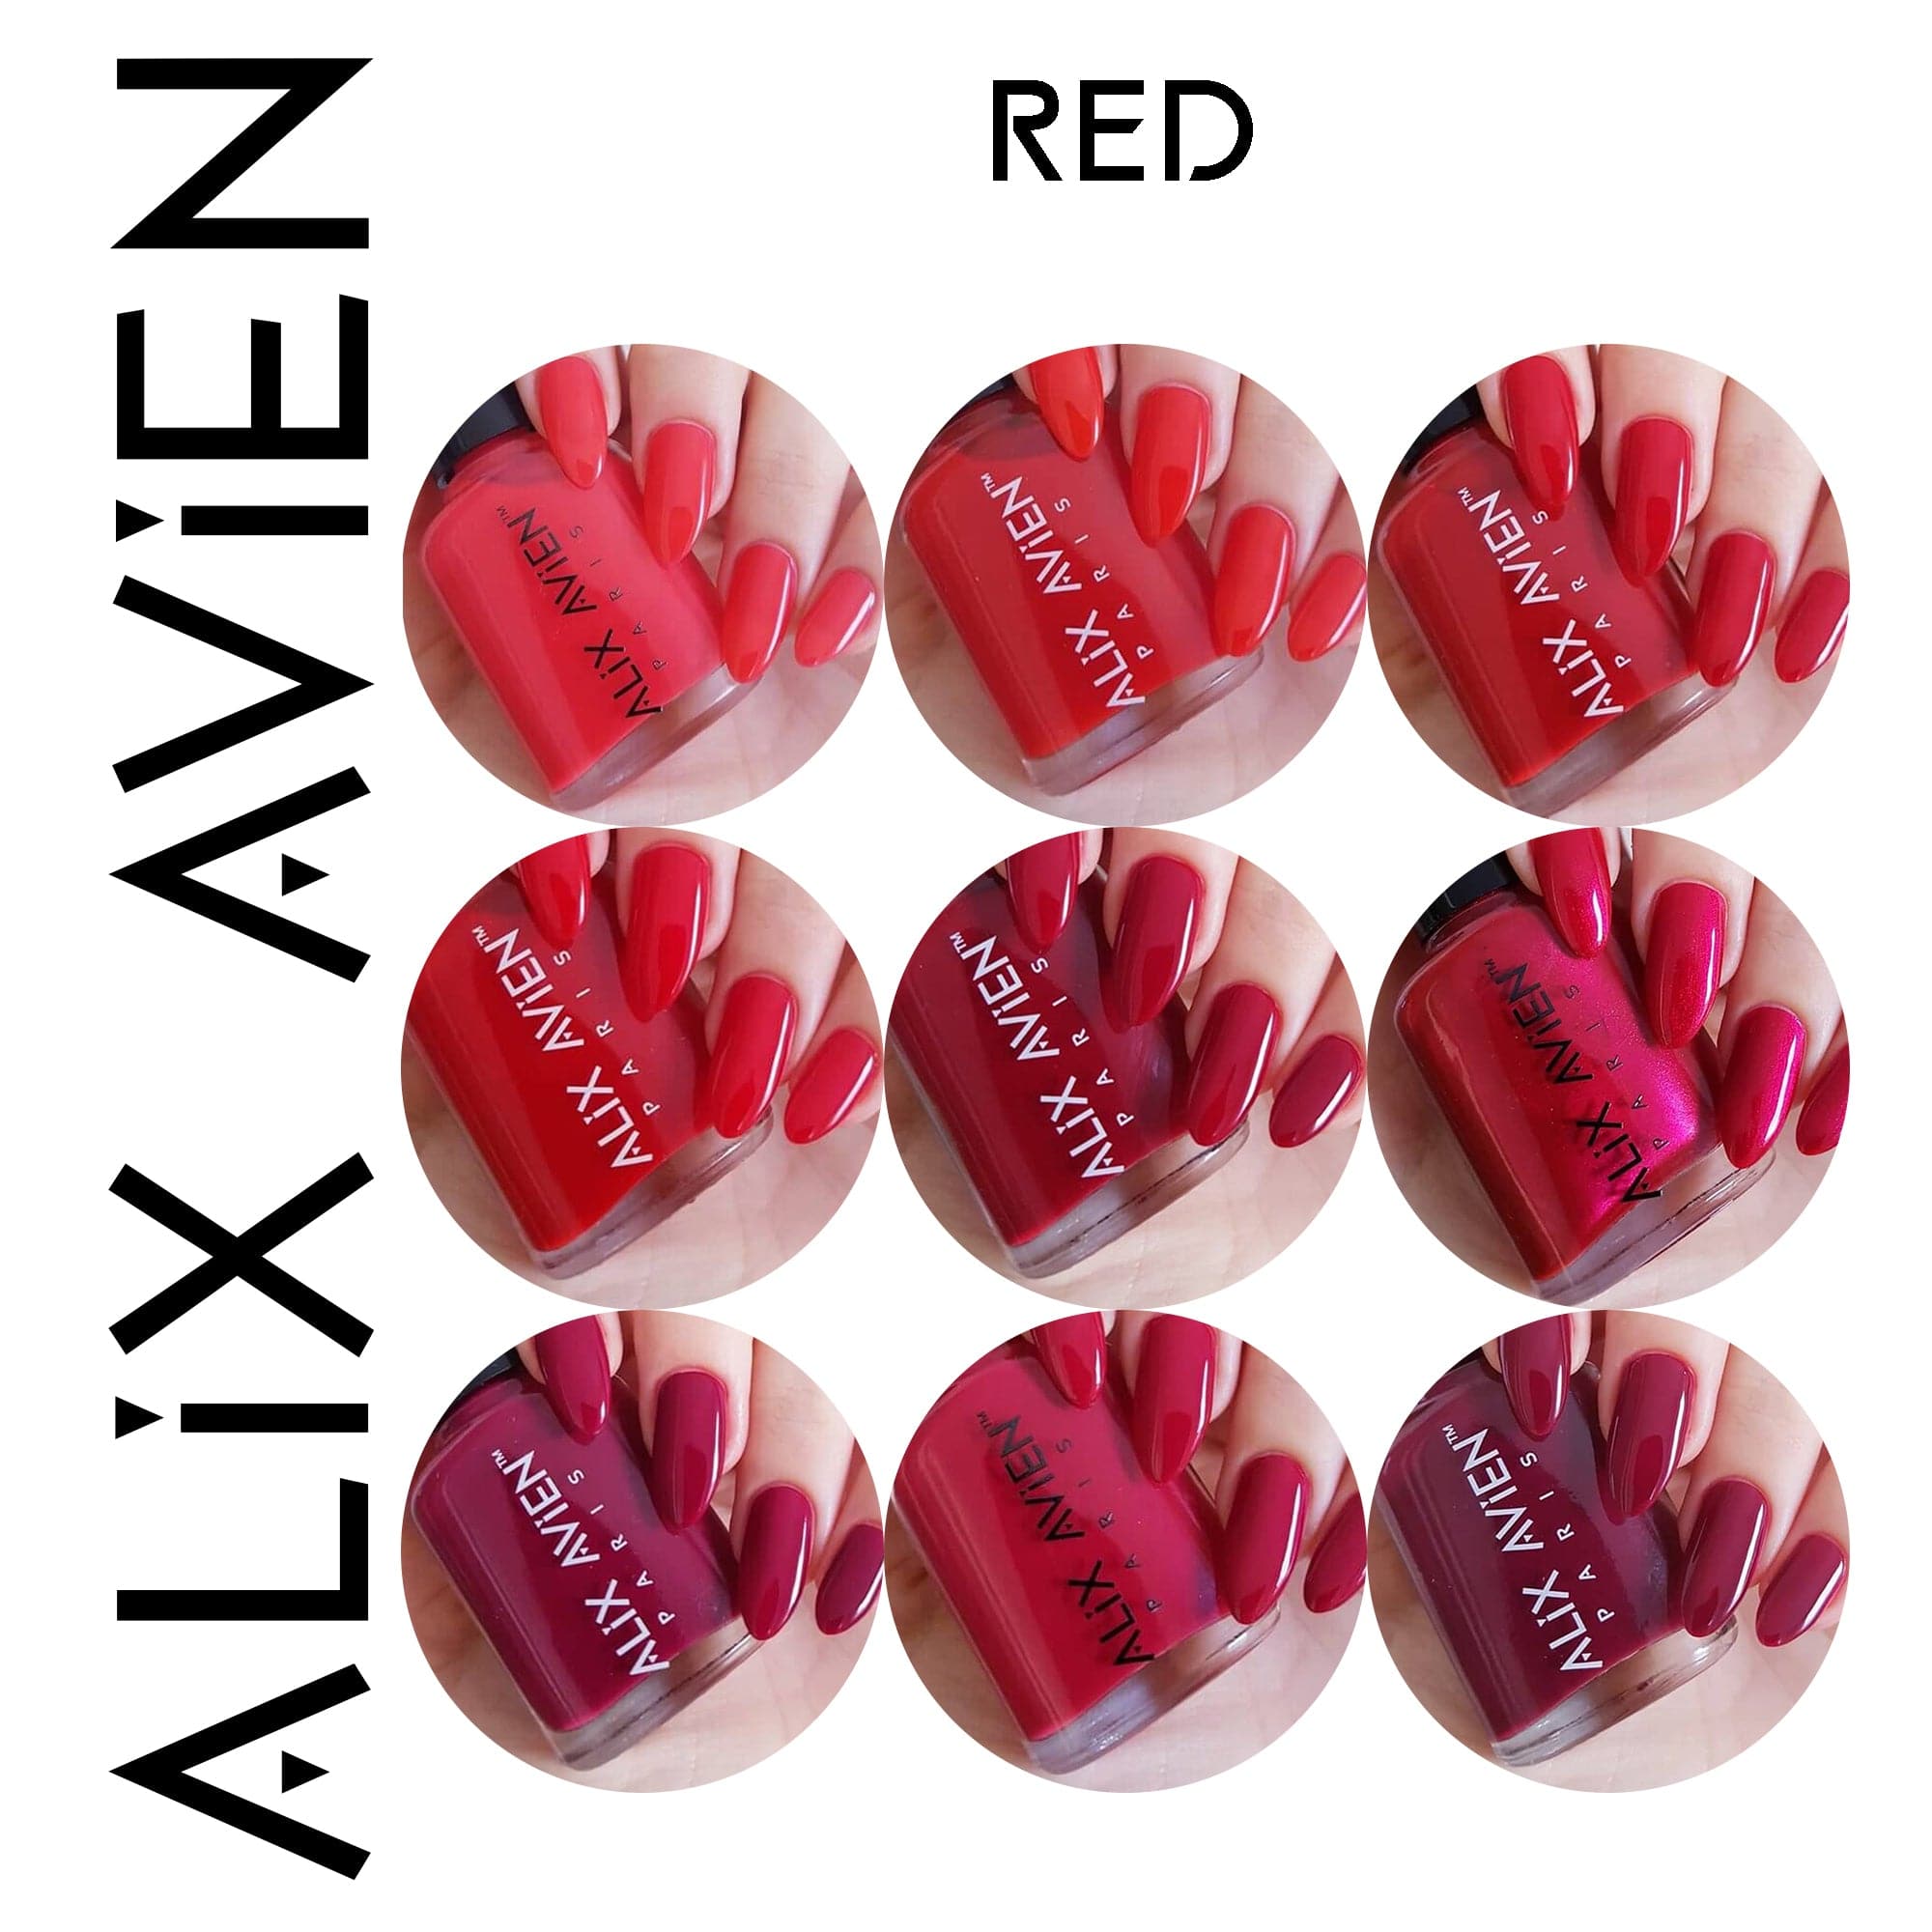 Alix Avien - Nail Polish No.104 (Luxury Red) - Eson Direct